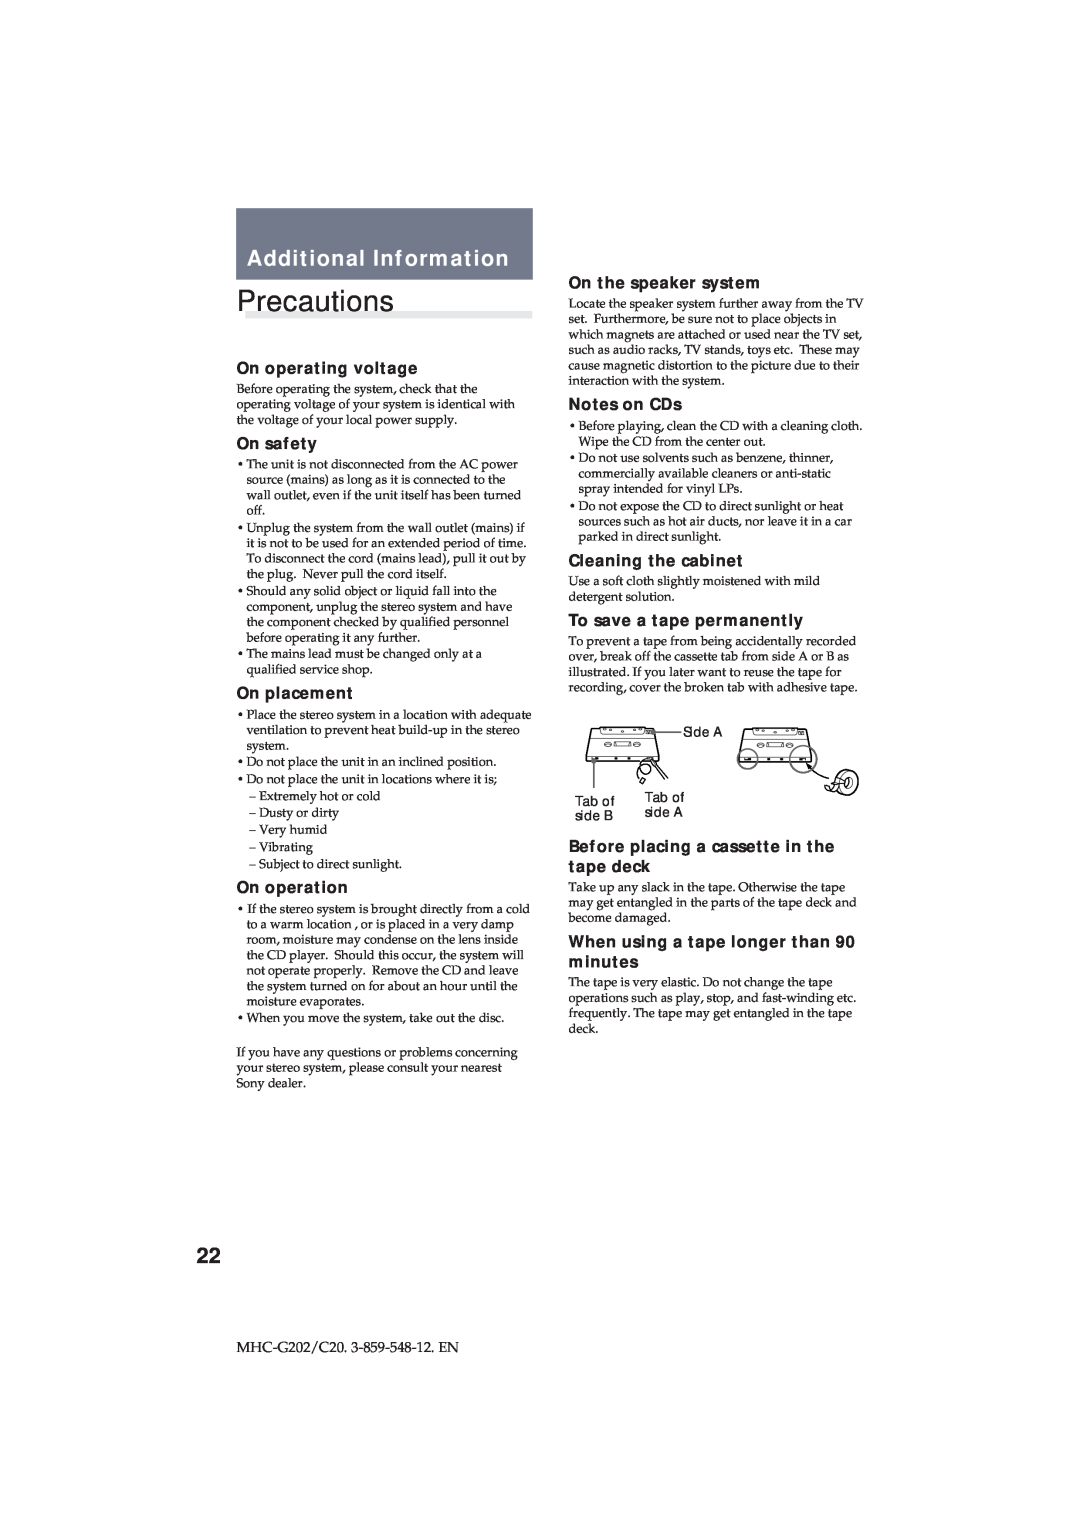 Sony MHC-G202/C20 manual Precautions, Additional Information 